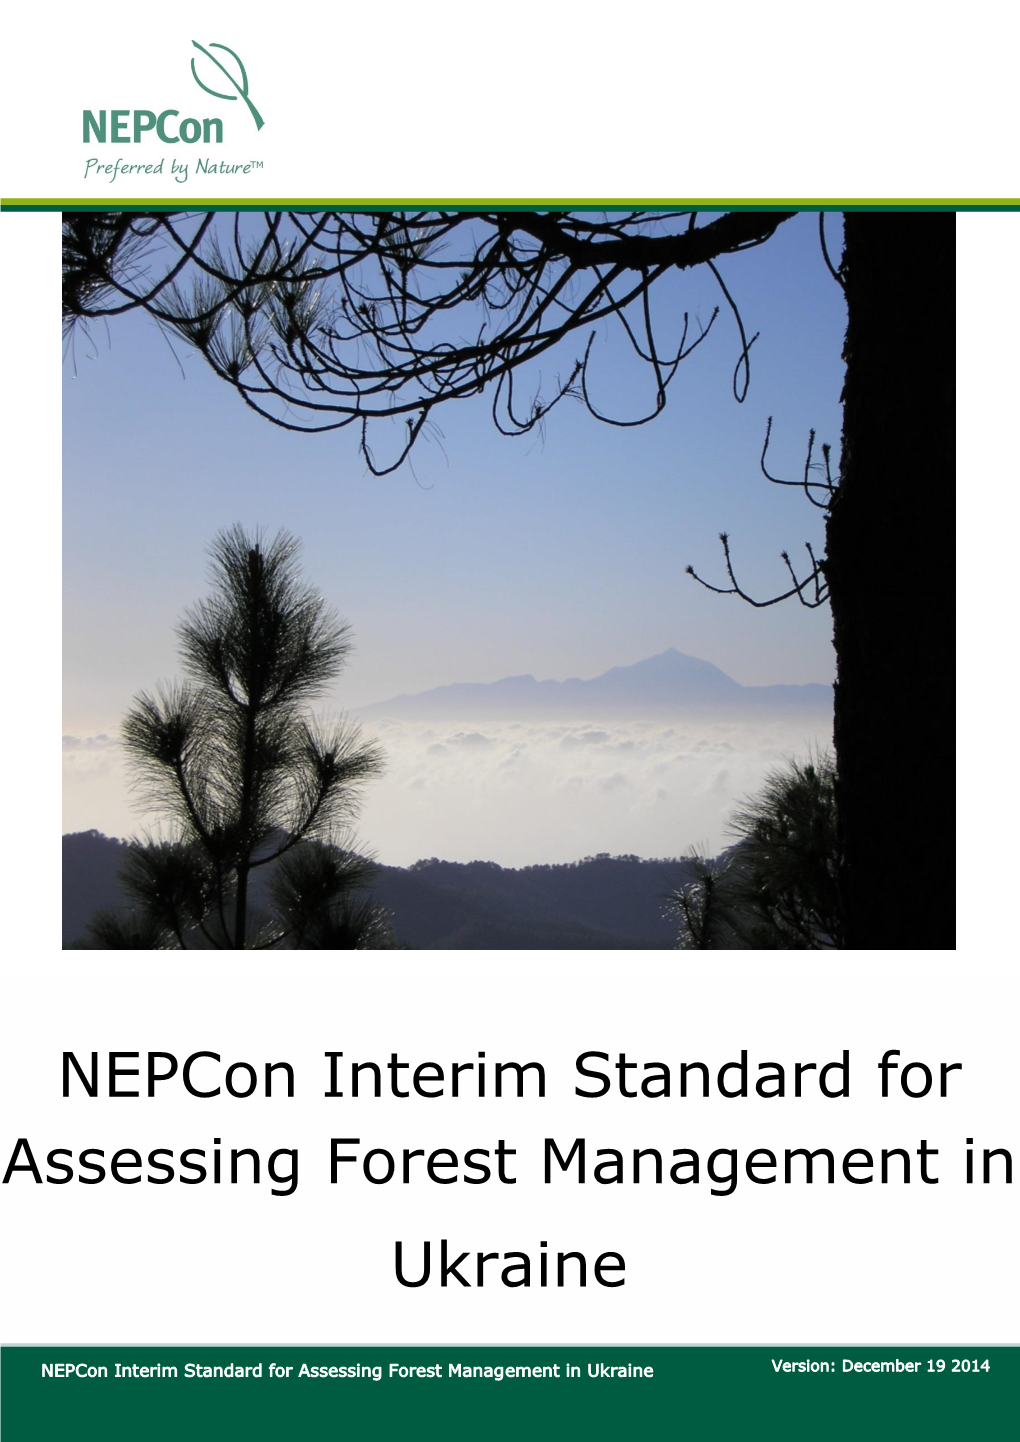 Nepcon Interim Standard for Assessing Forest Management in Ukraine